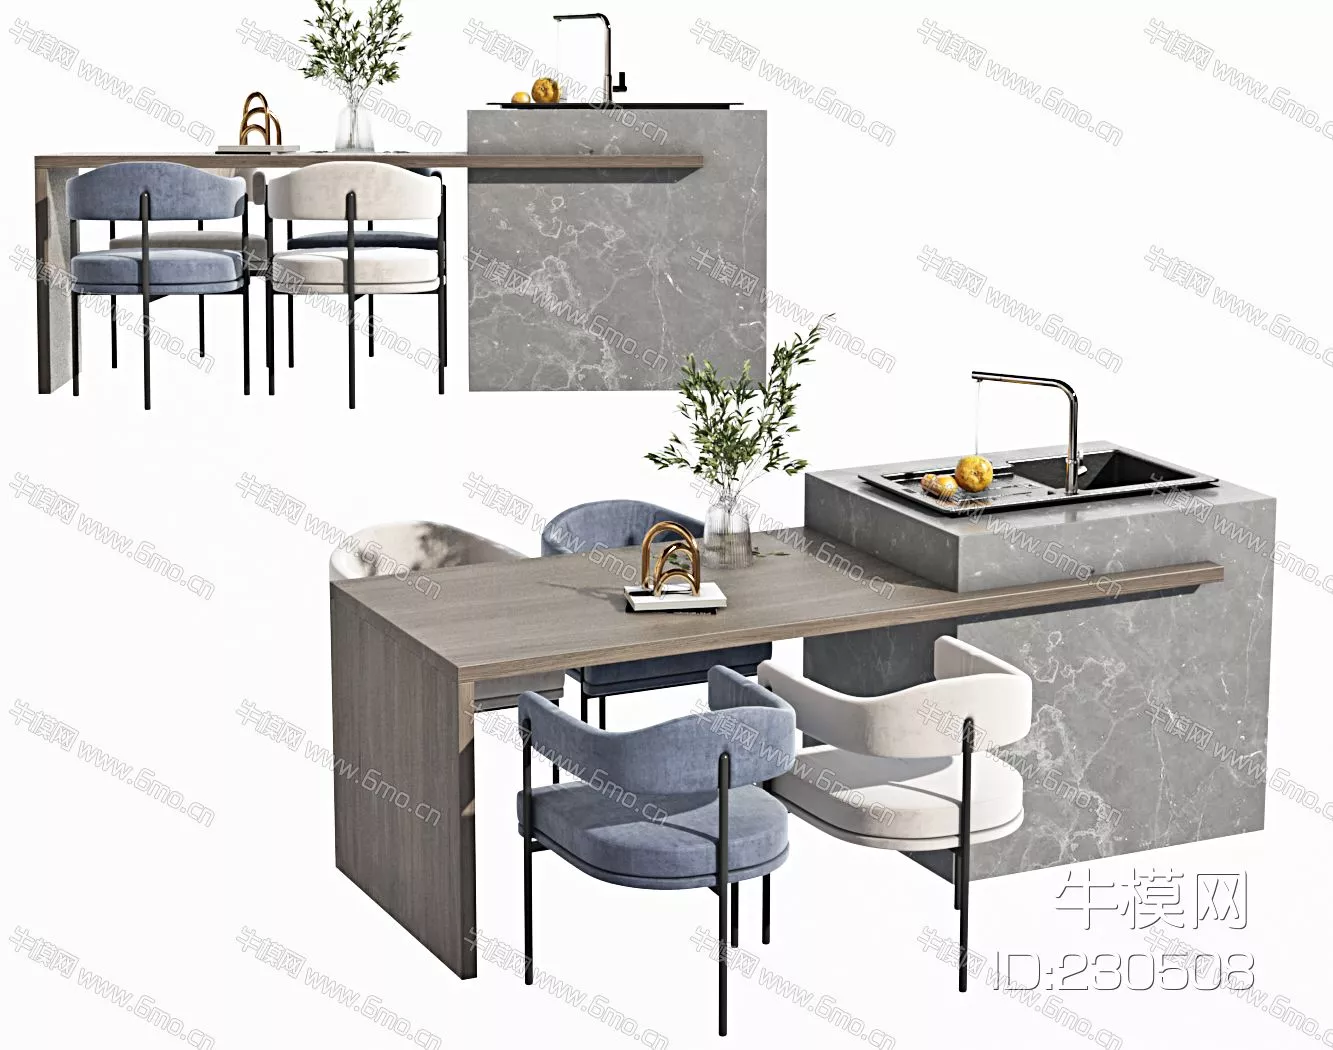 MODERN DINING TABLE SET - SKETCHUP 3D MODEL - VRAY - 230508